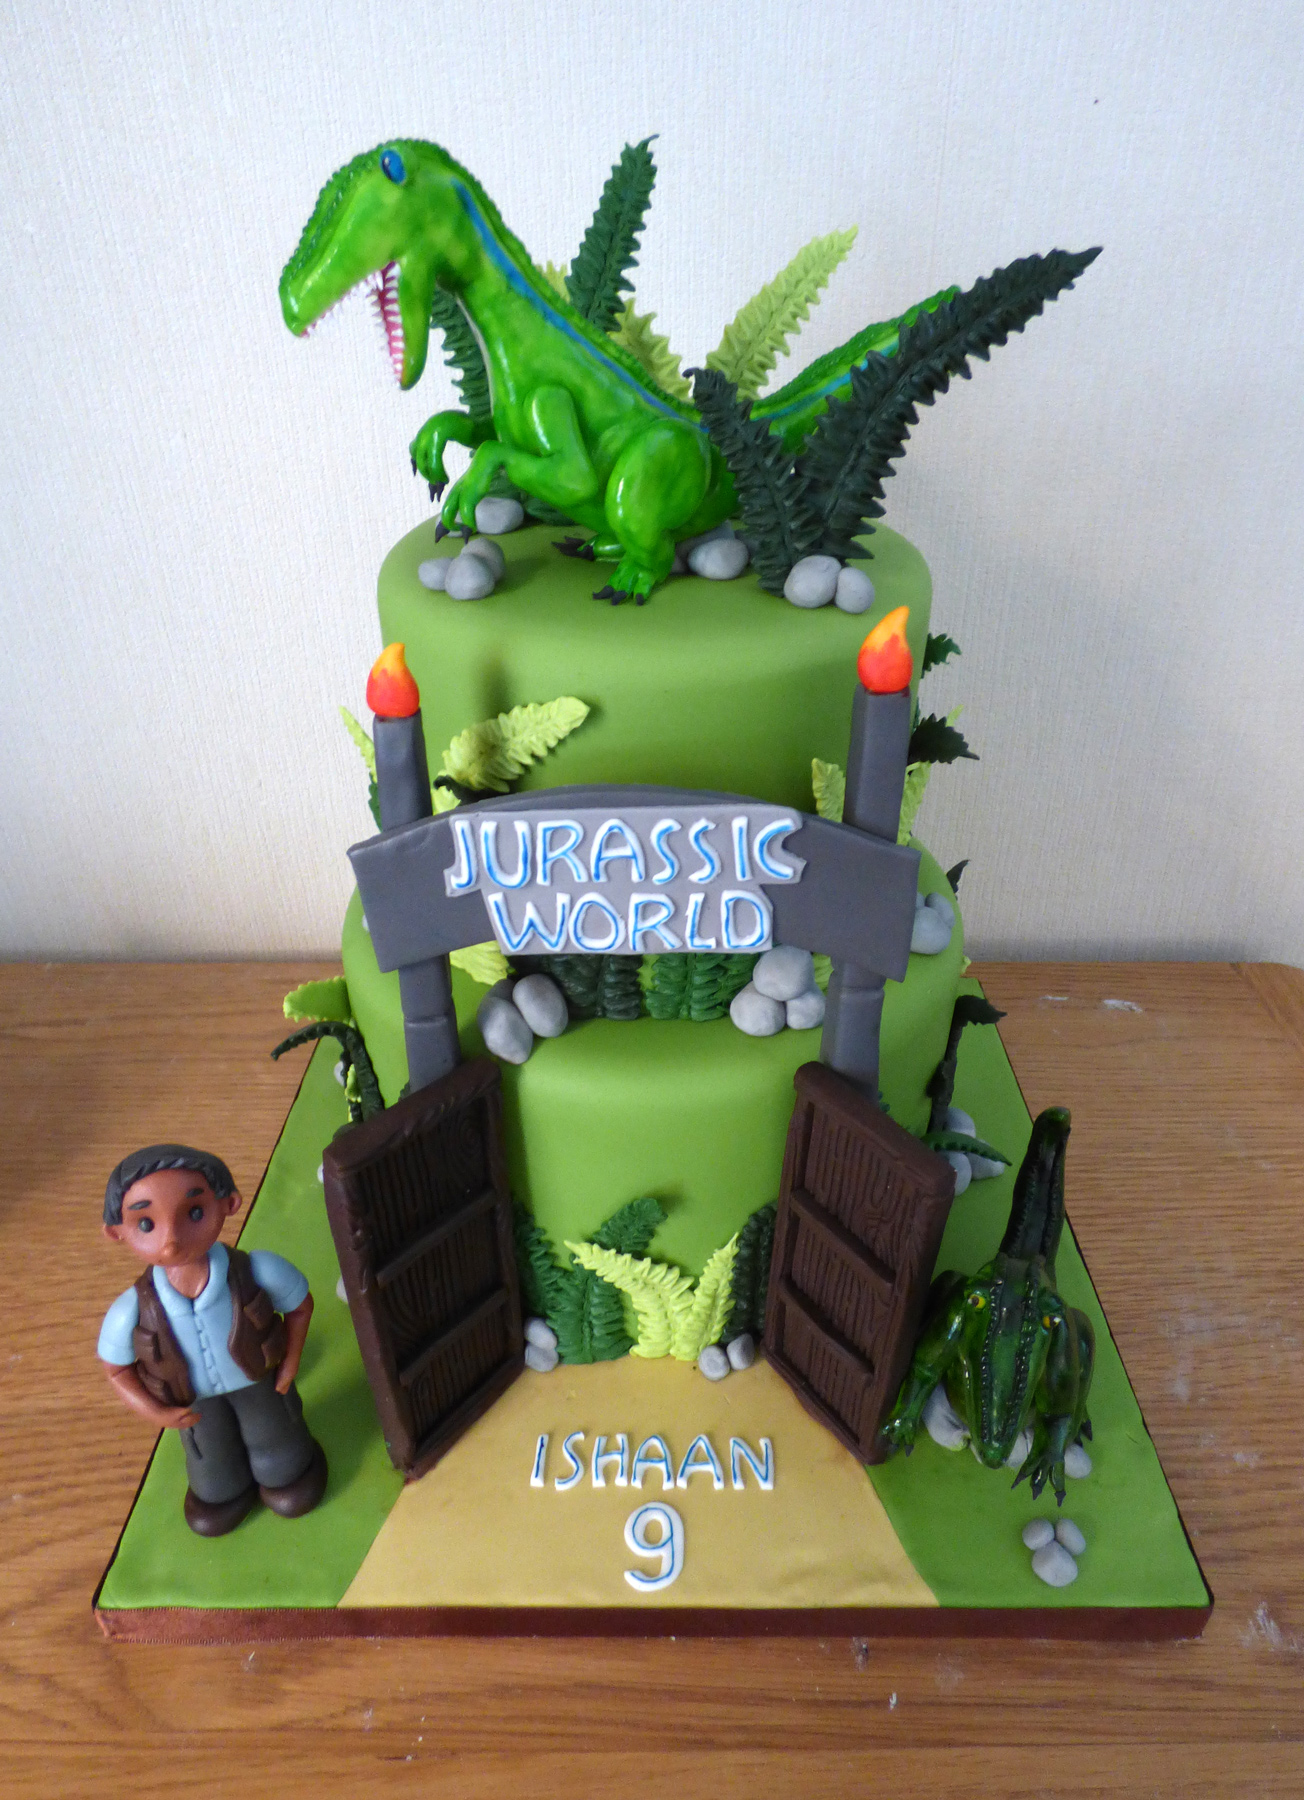 30+ Amazing Photo of Jurassic Park Birthday Cake - davemelillo.com |  Dinosaur birthday cakes, Jurassic world cake, Park birthday